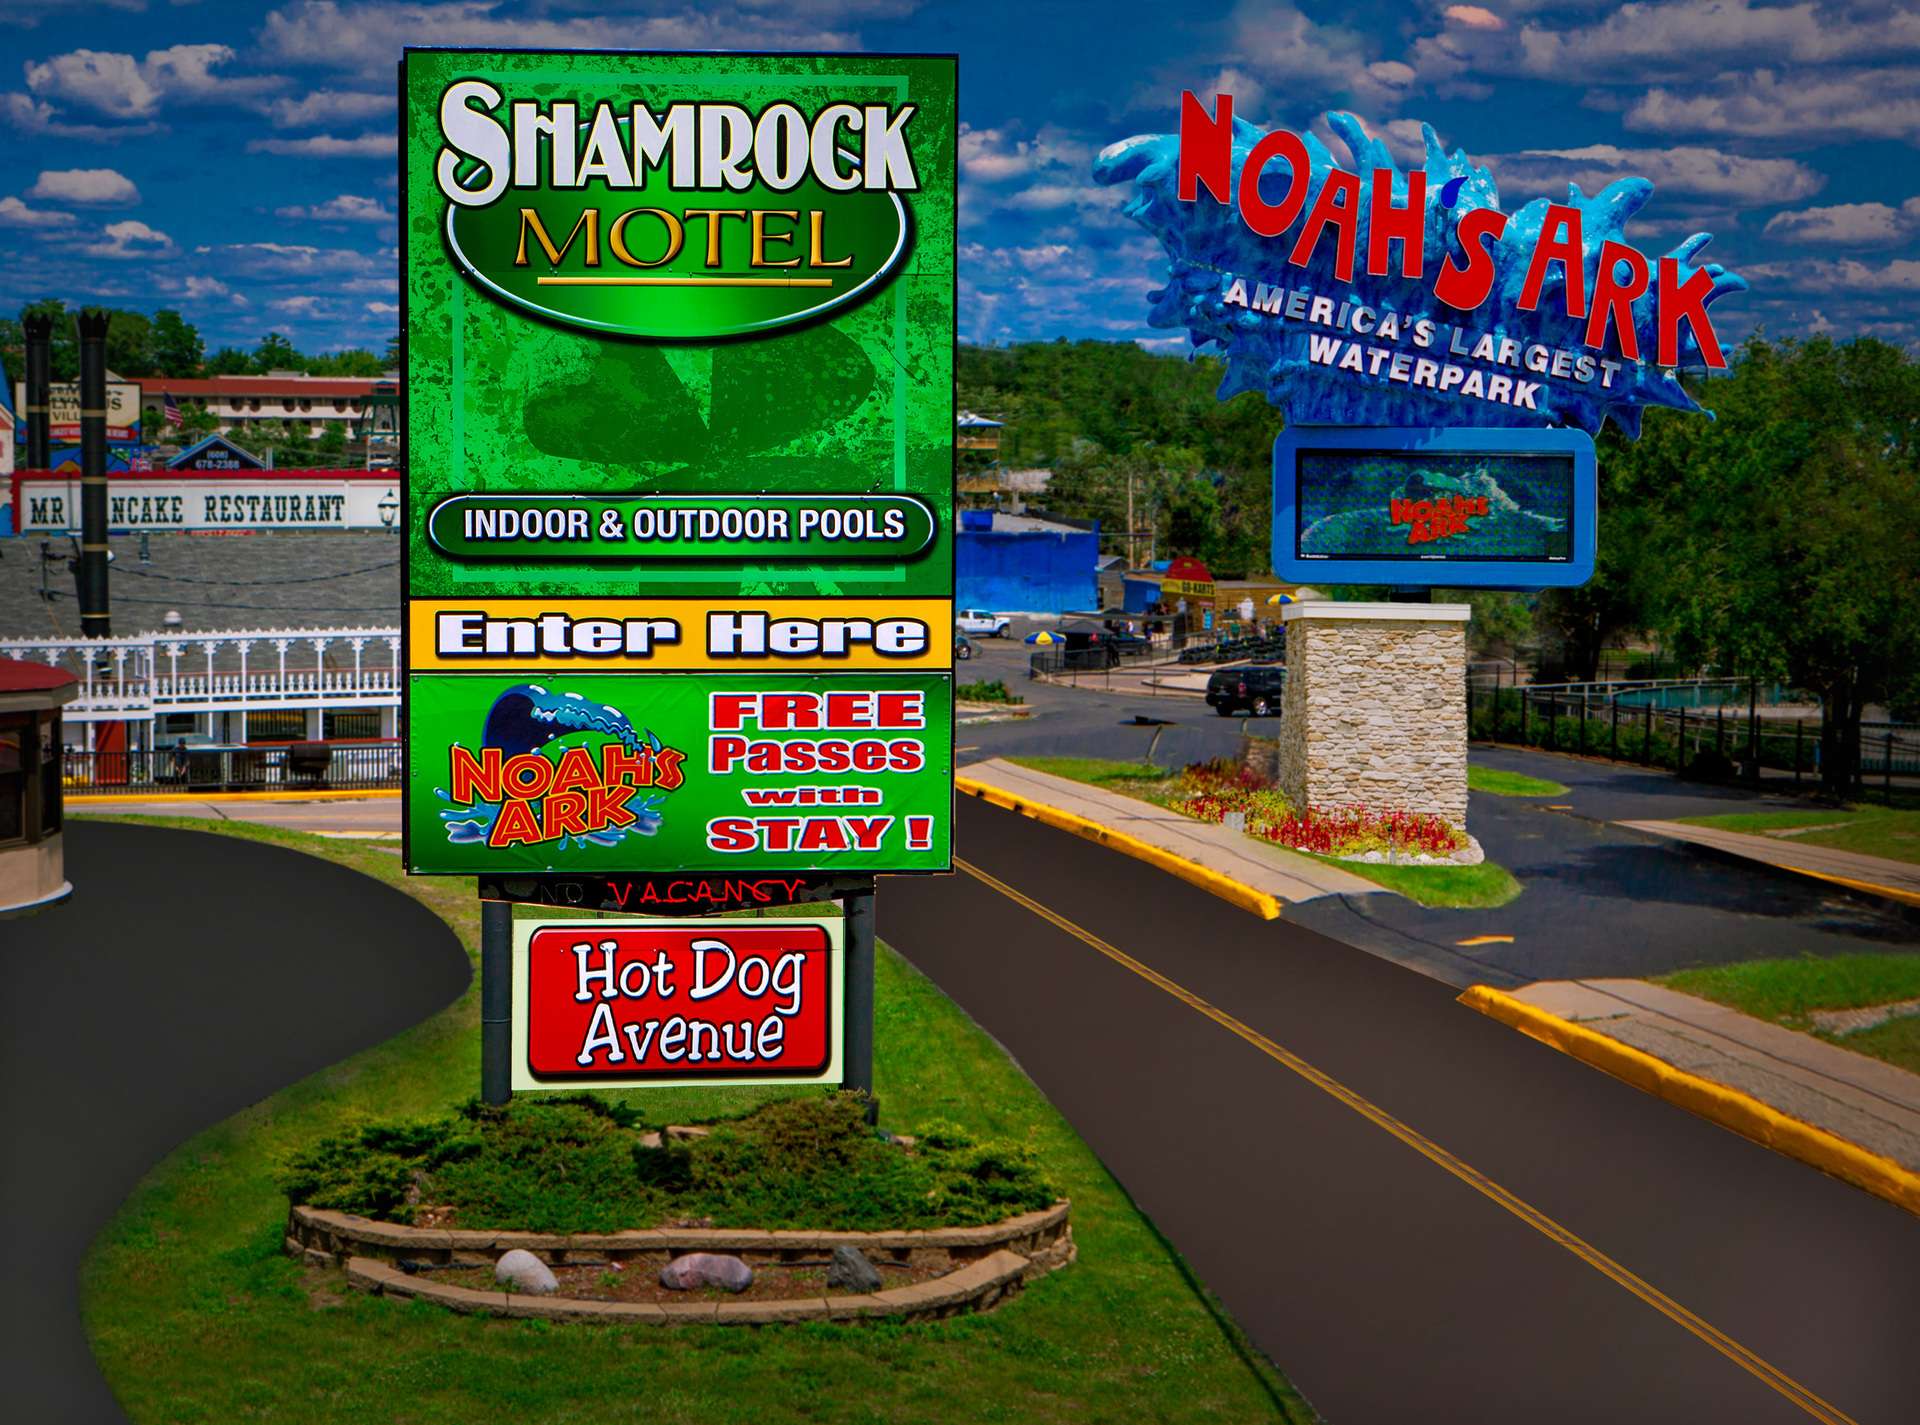 Shamrock Motel is located right across from Noah’s Ark!